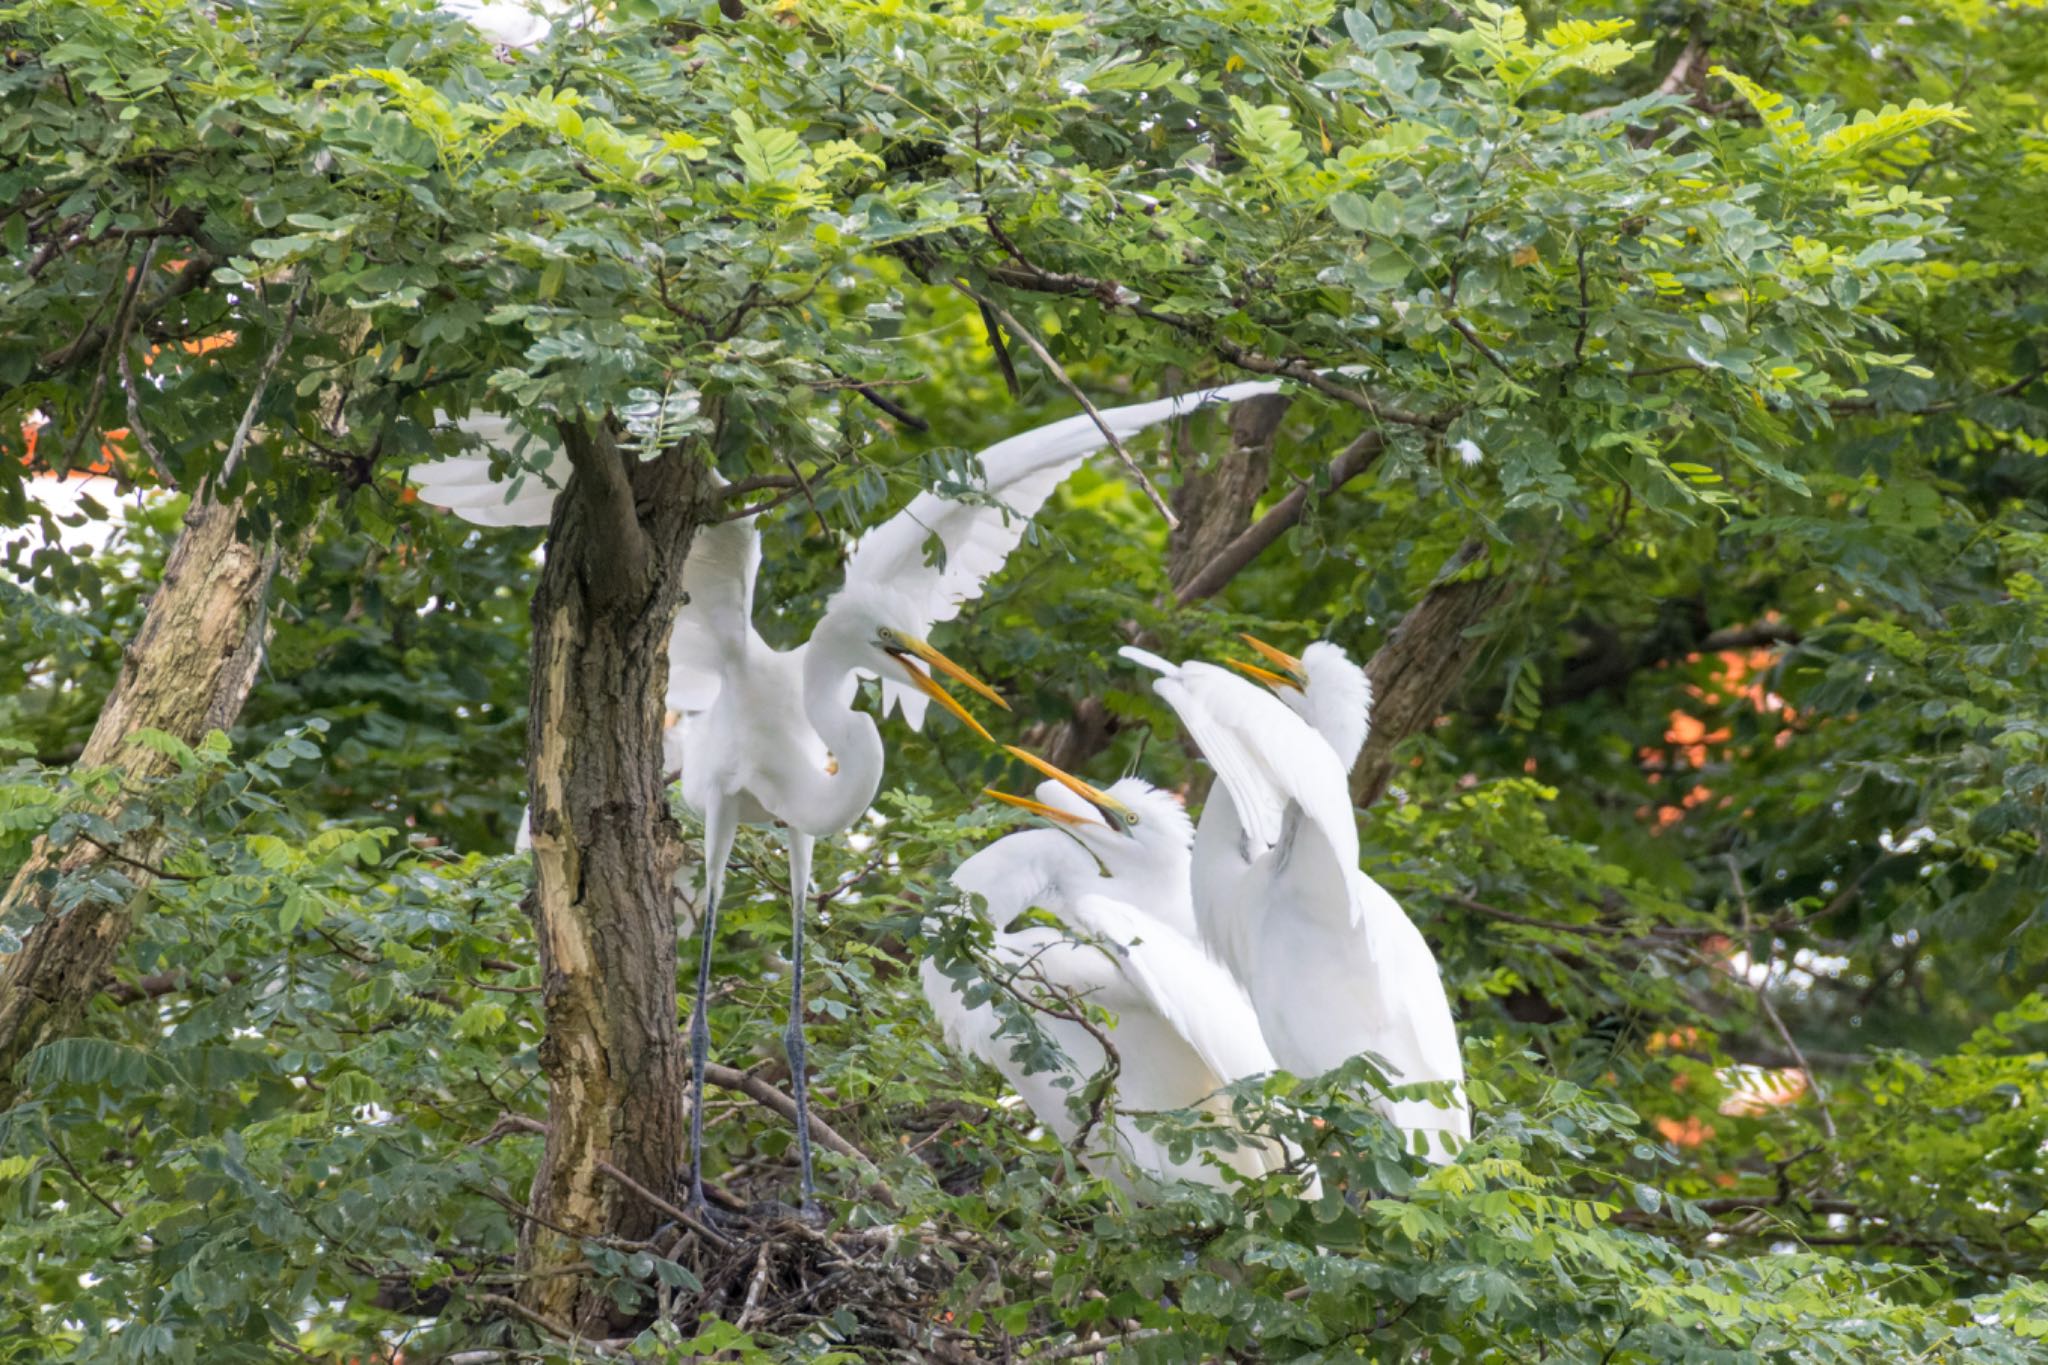 Photo of Great Egret at サギのコロニー by LeoLeoNya